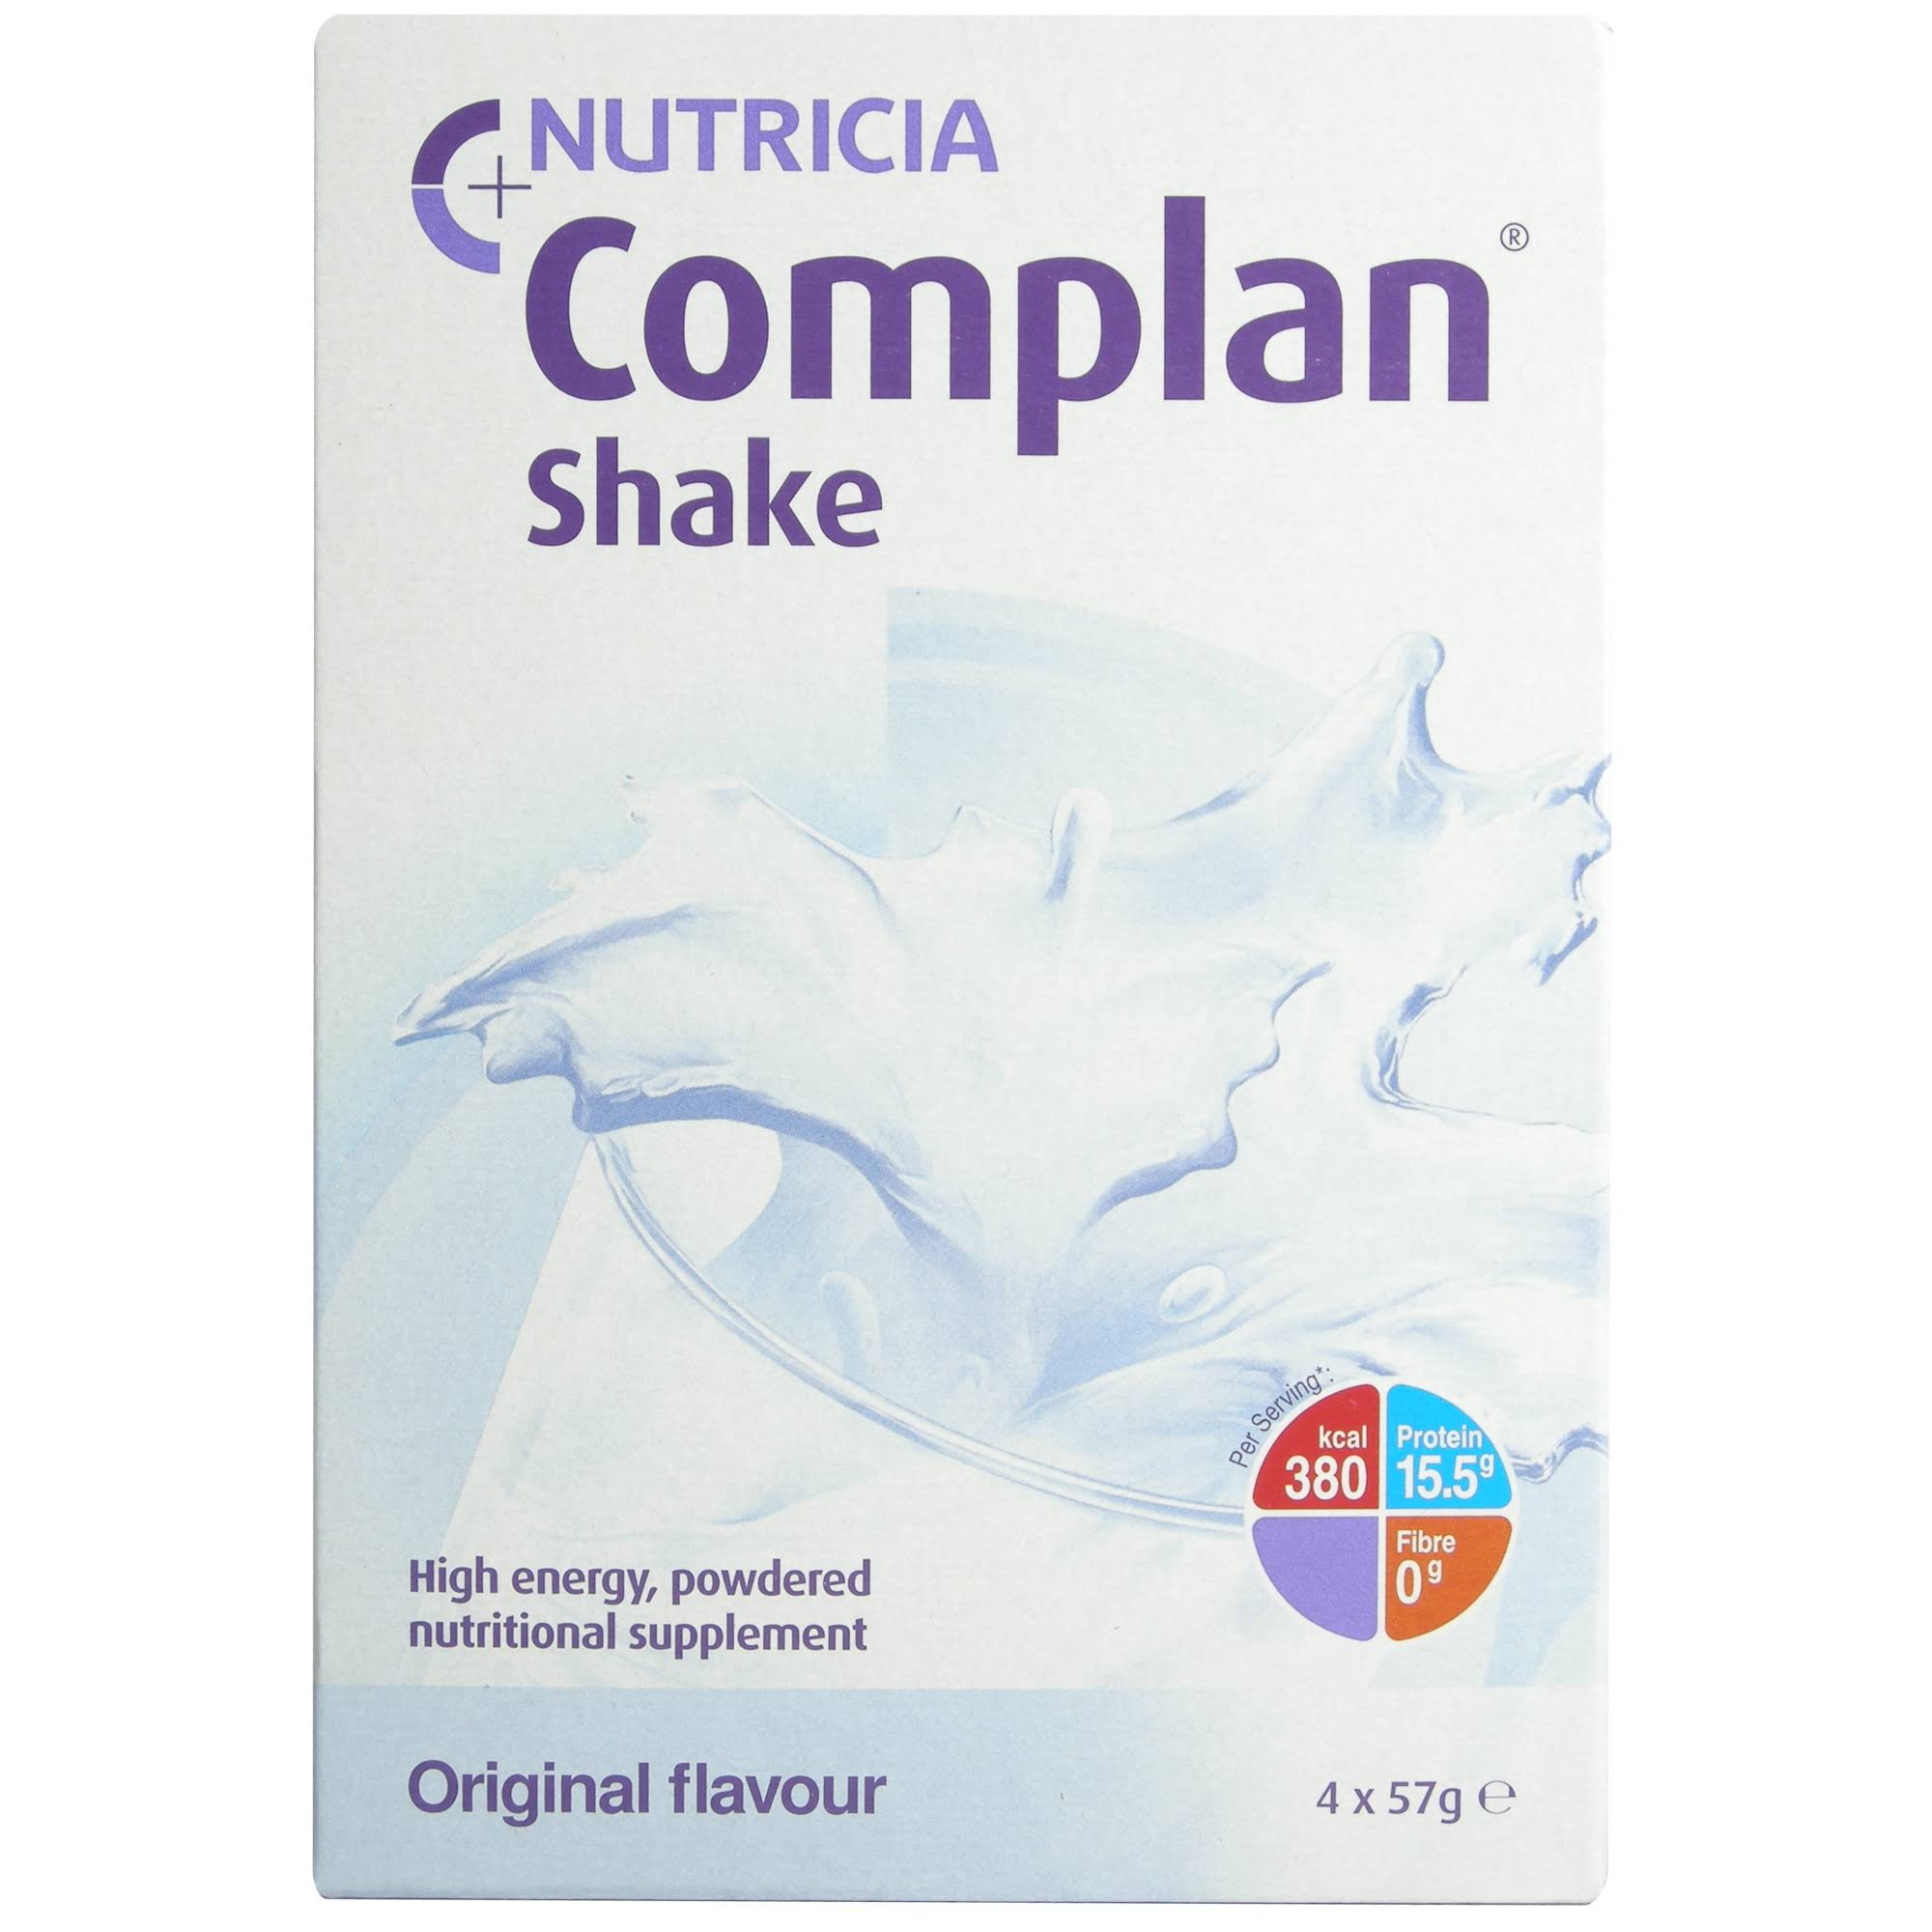 Nutricia Complan Shake Original Flavour Dietary Supplement - 57g, 4pk